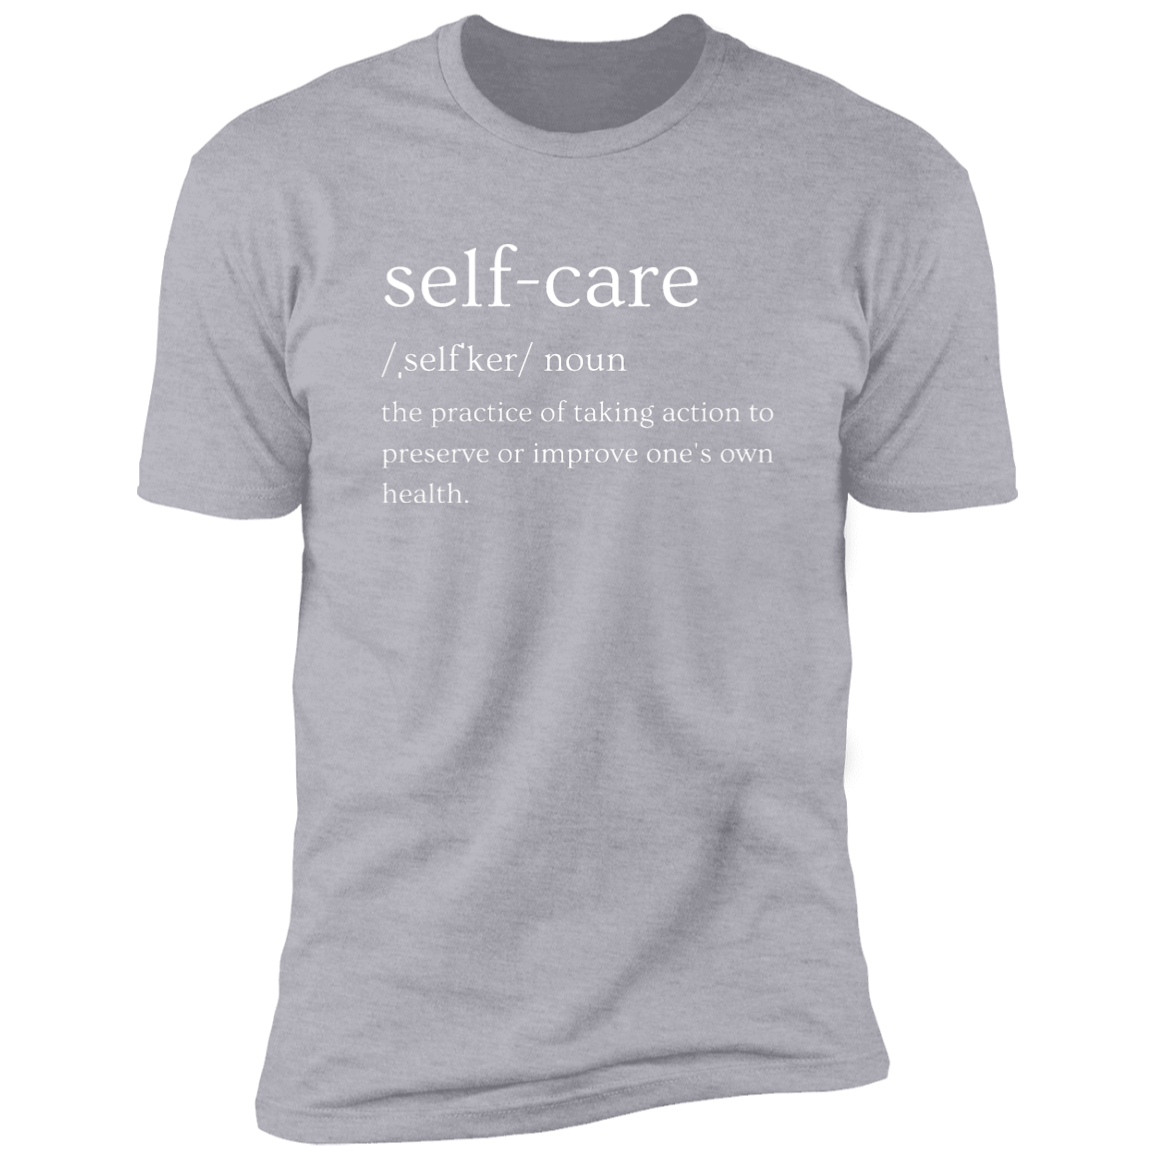 Self-care Short Sleeve Tee